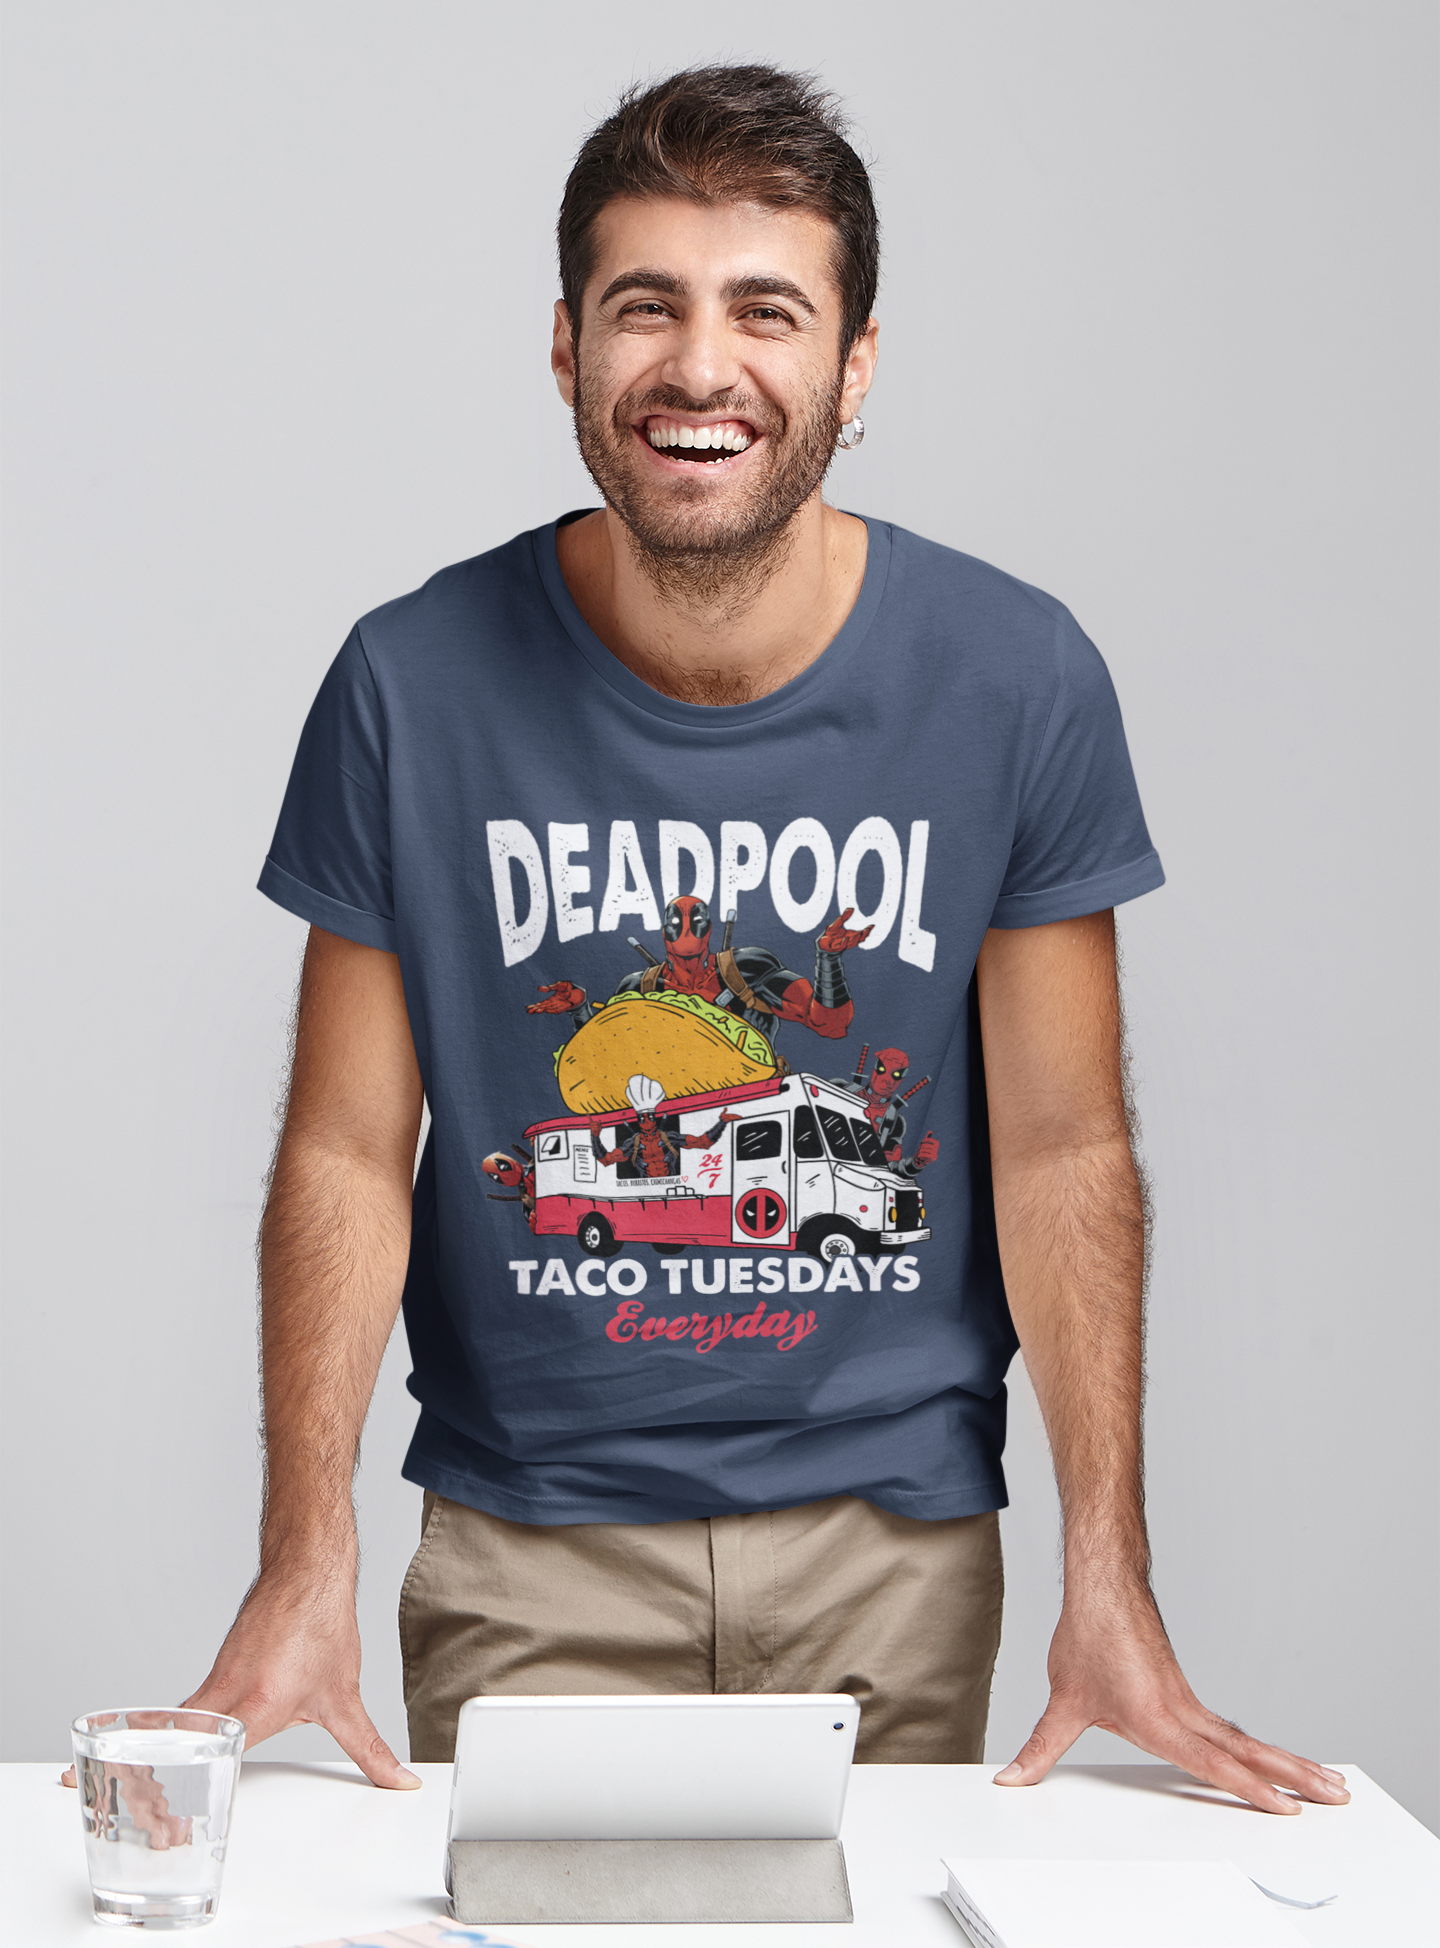 Deadpool T Shirt, Taco Tuesdays Everyday Tshirt, Superhero Deadpool T Shirt